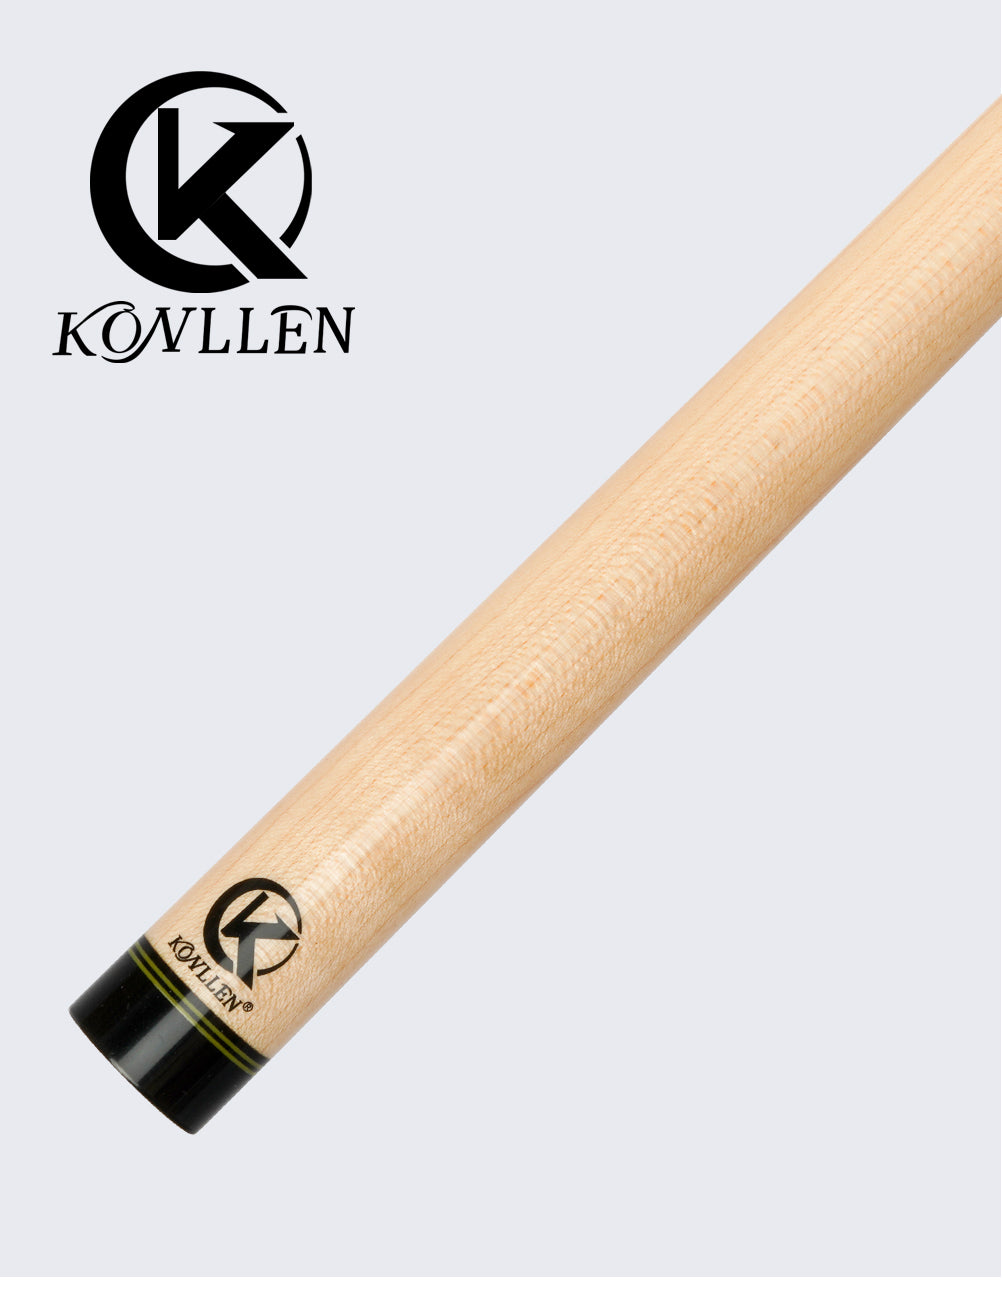 KONLLEN Solid Maple Wood Technology Shaft Billiard Pool Cue Kit Shaft 3/8*8 Radial Pin Joint 12.9mm Tip Carbon Fiber Tube Shaft